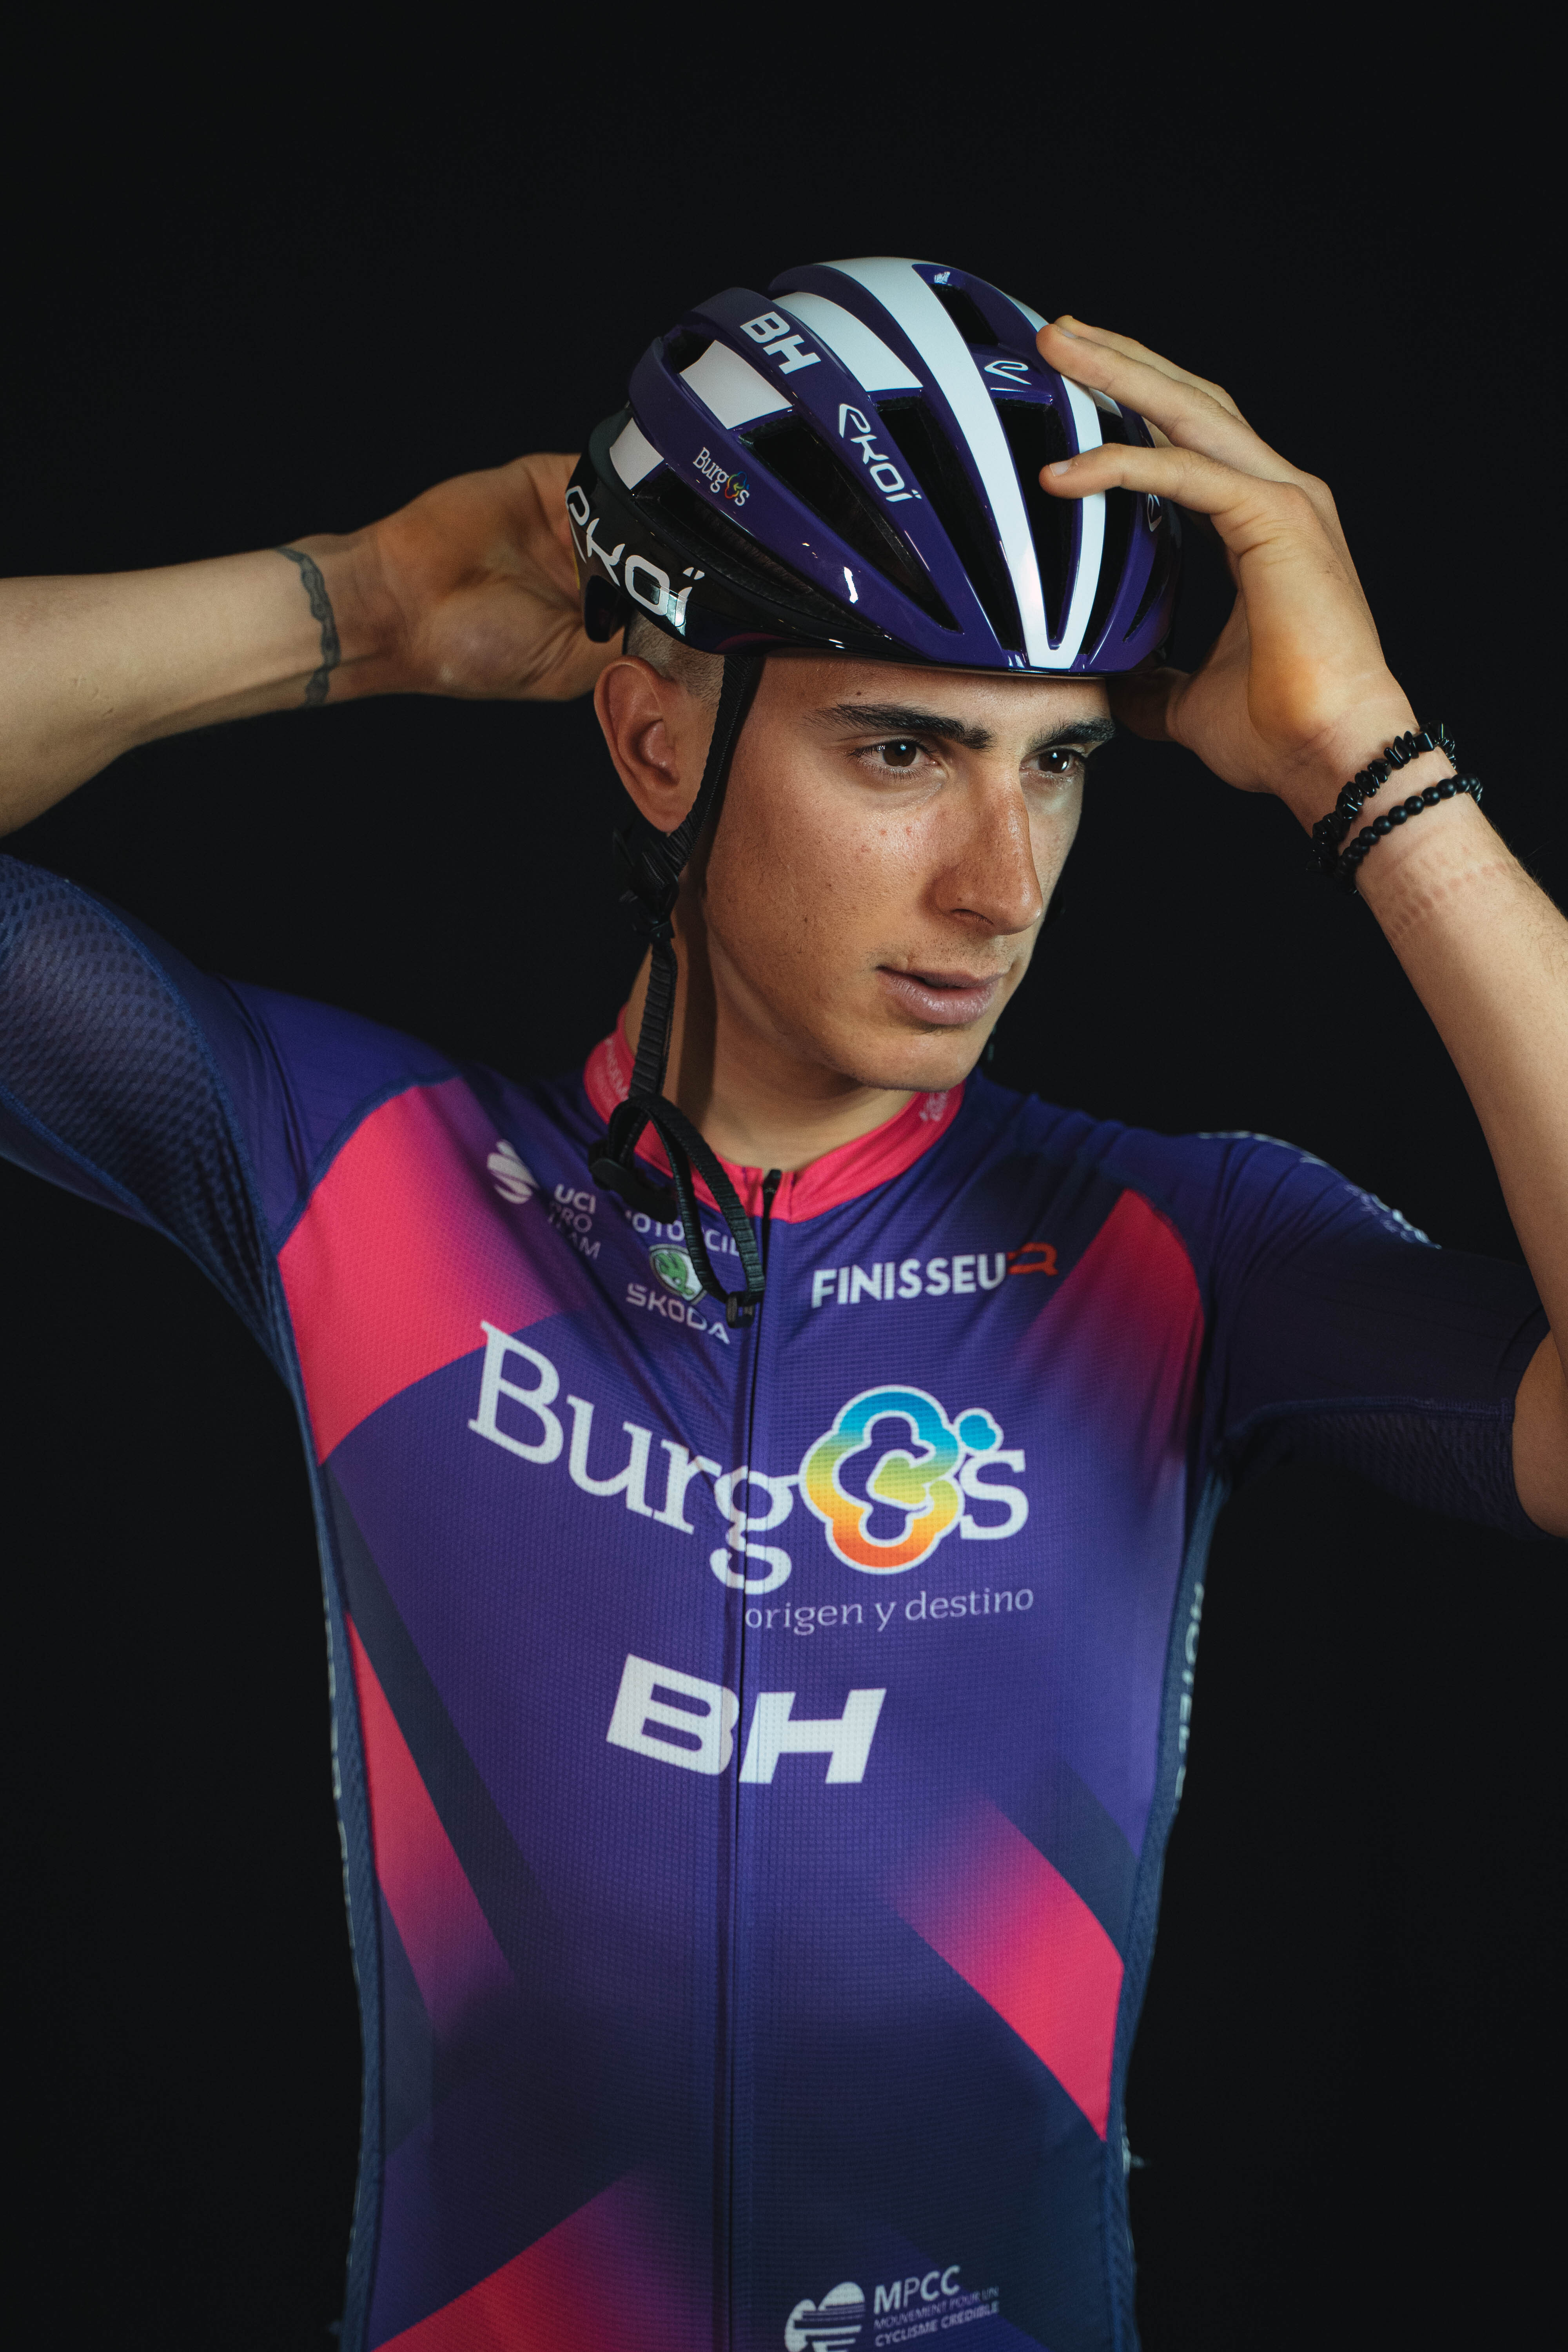 Burgos BH nuevo maillot Finisseur para 2023